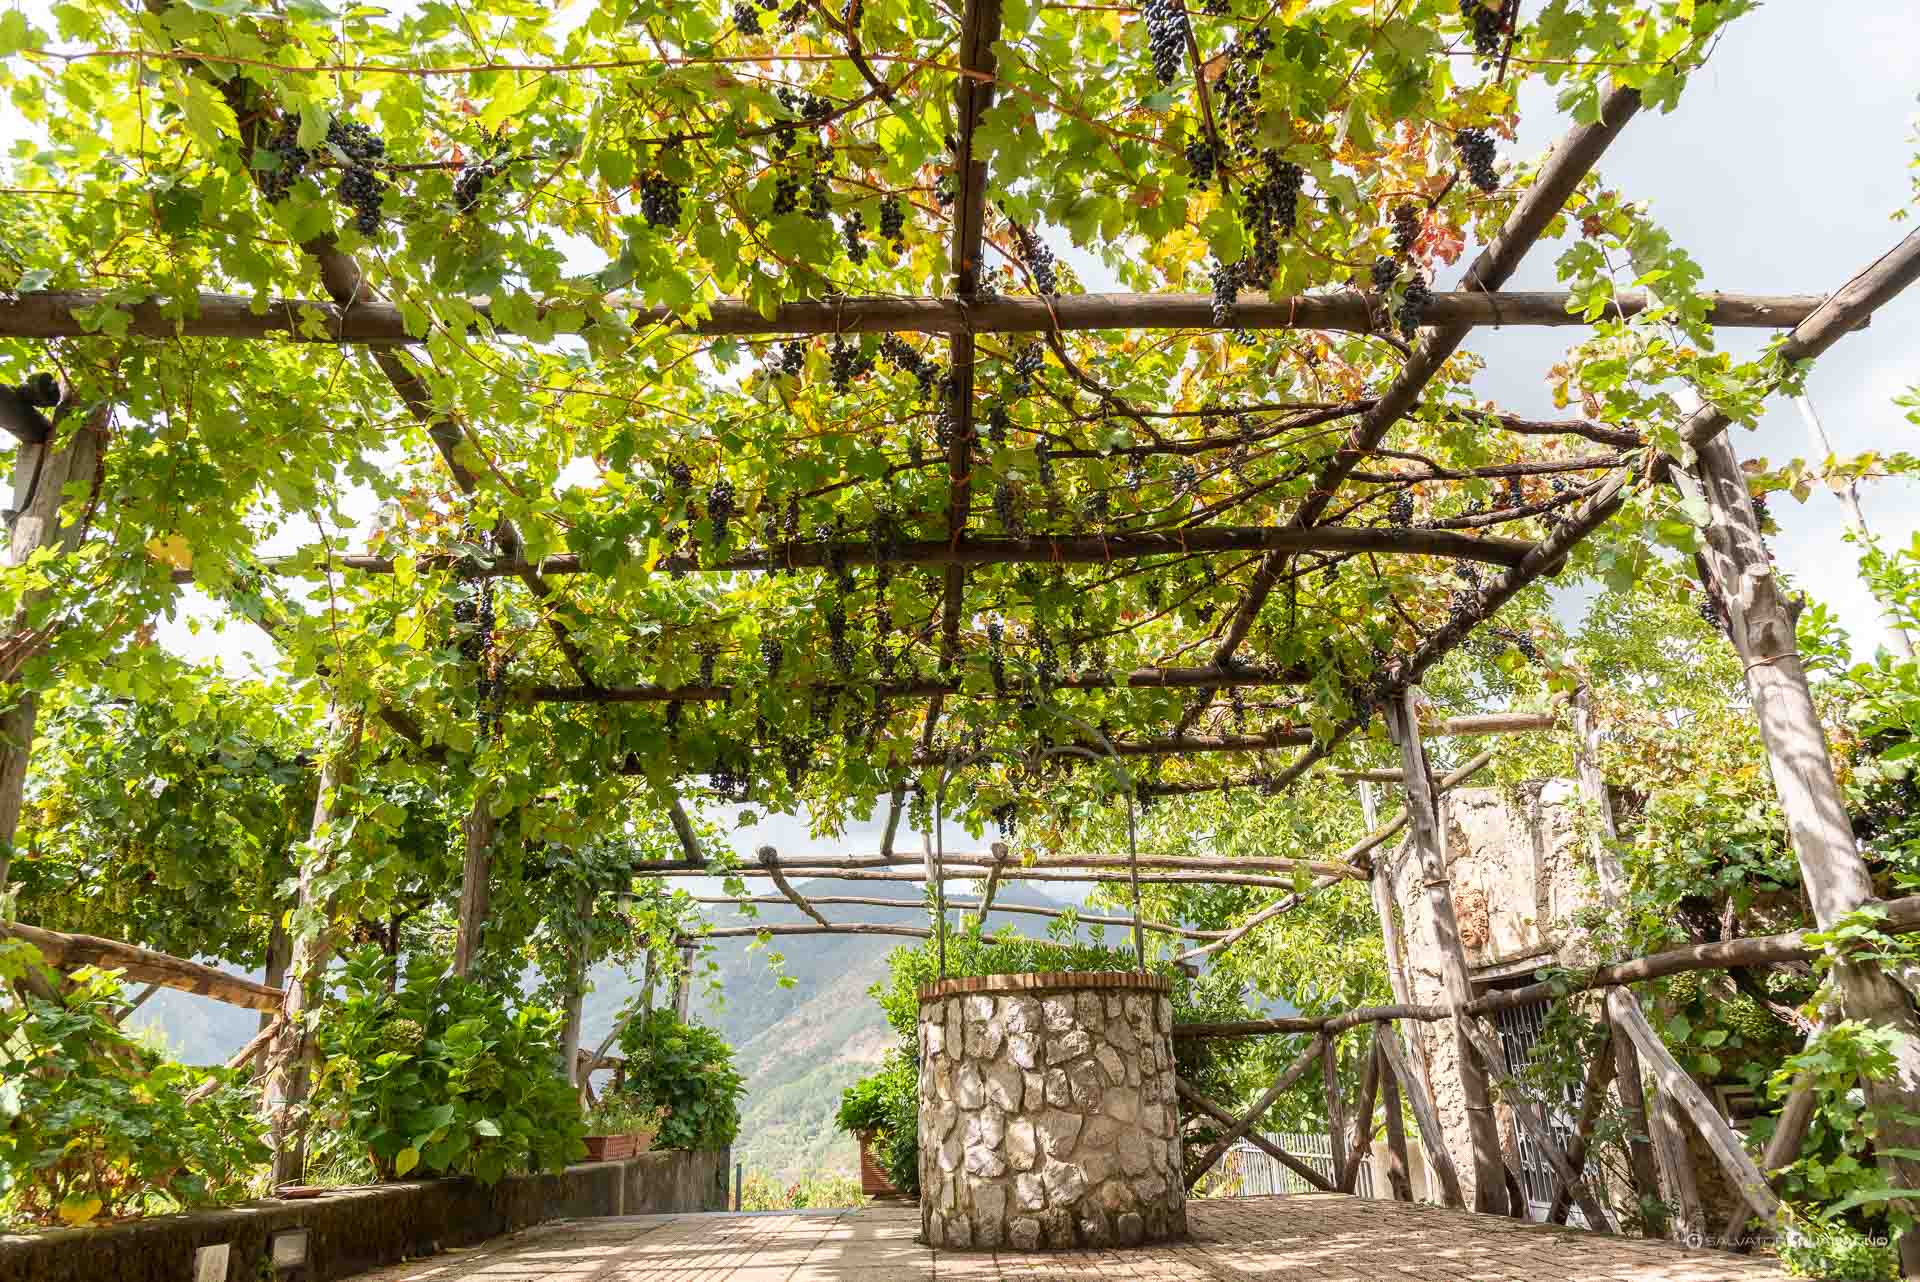 Vendemmia - Grape harvest - Cantine Reale - Tramonti - Authentic Amalfi Coast